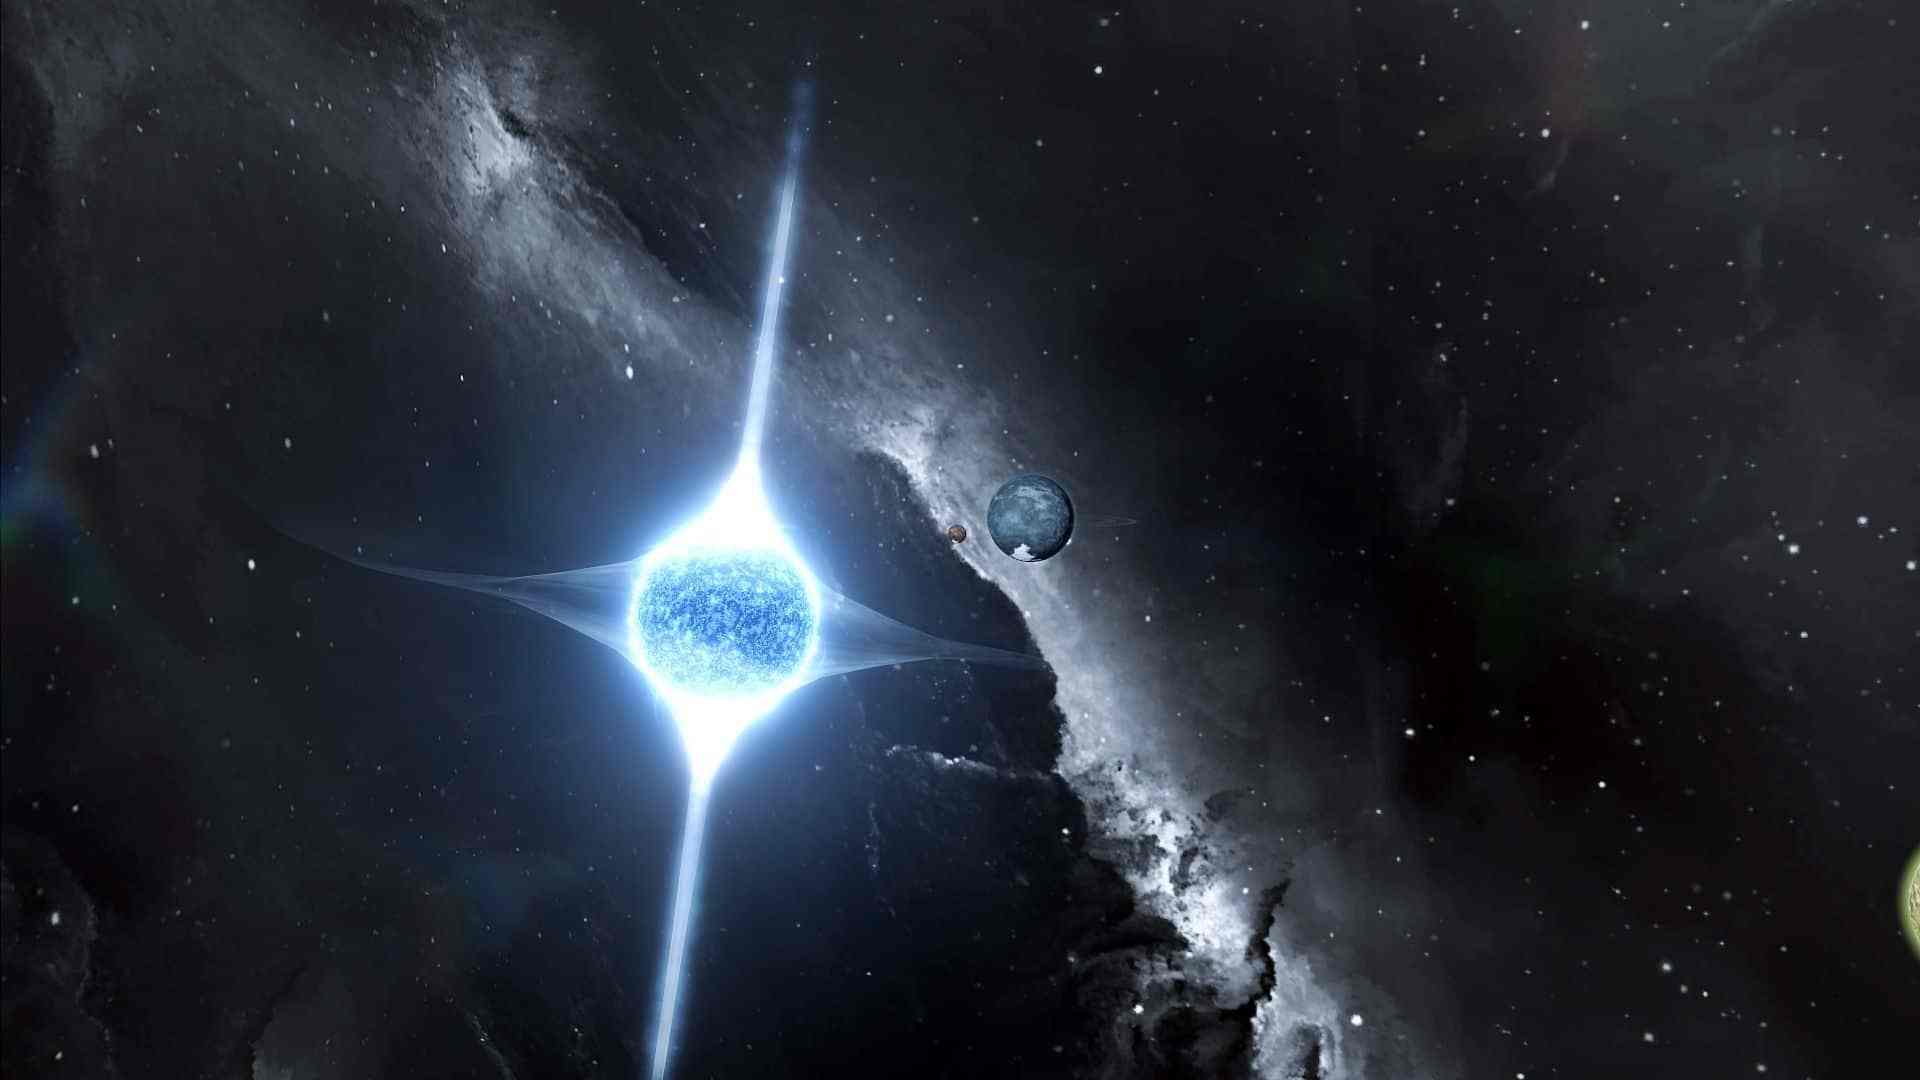 Universe Most Dense Star - Neutron Star